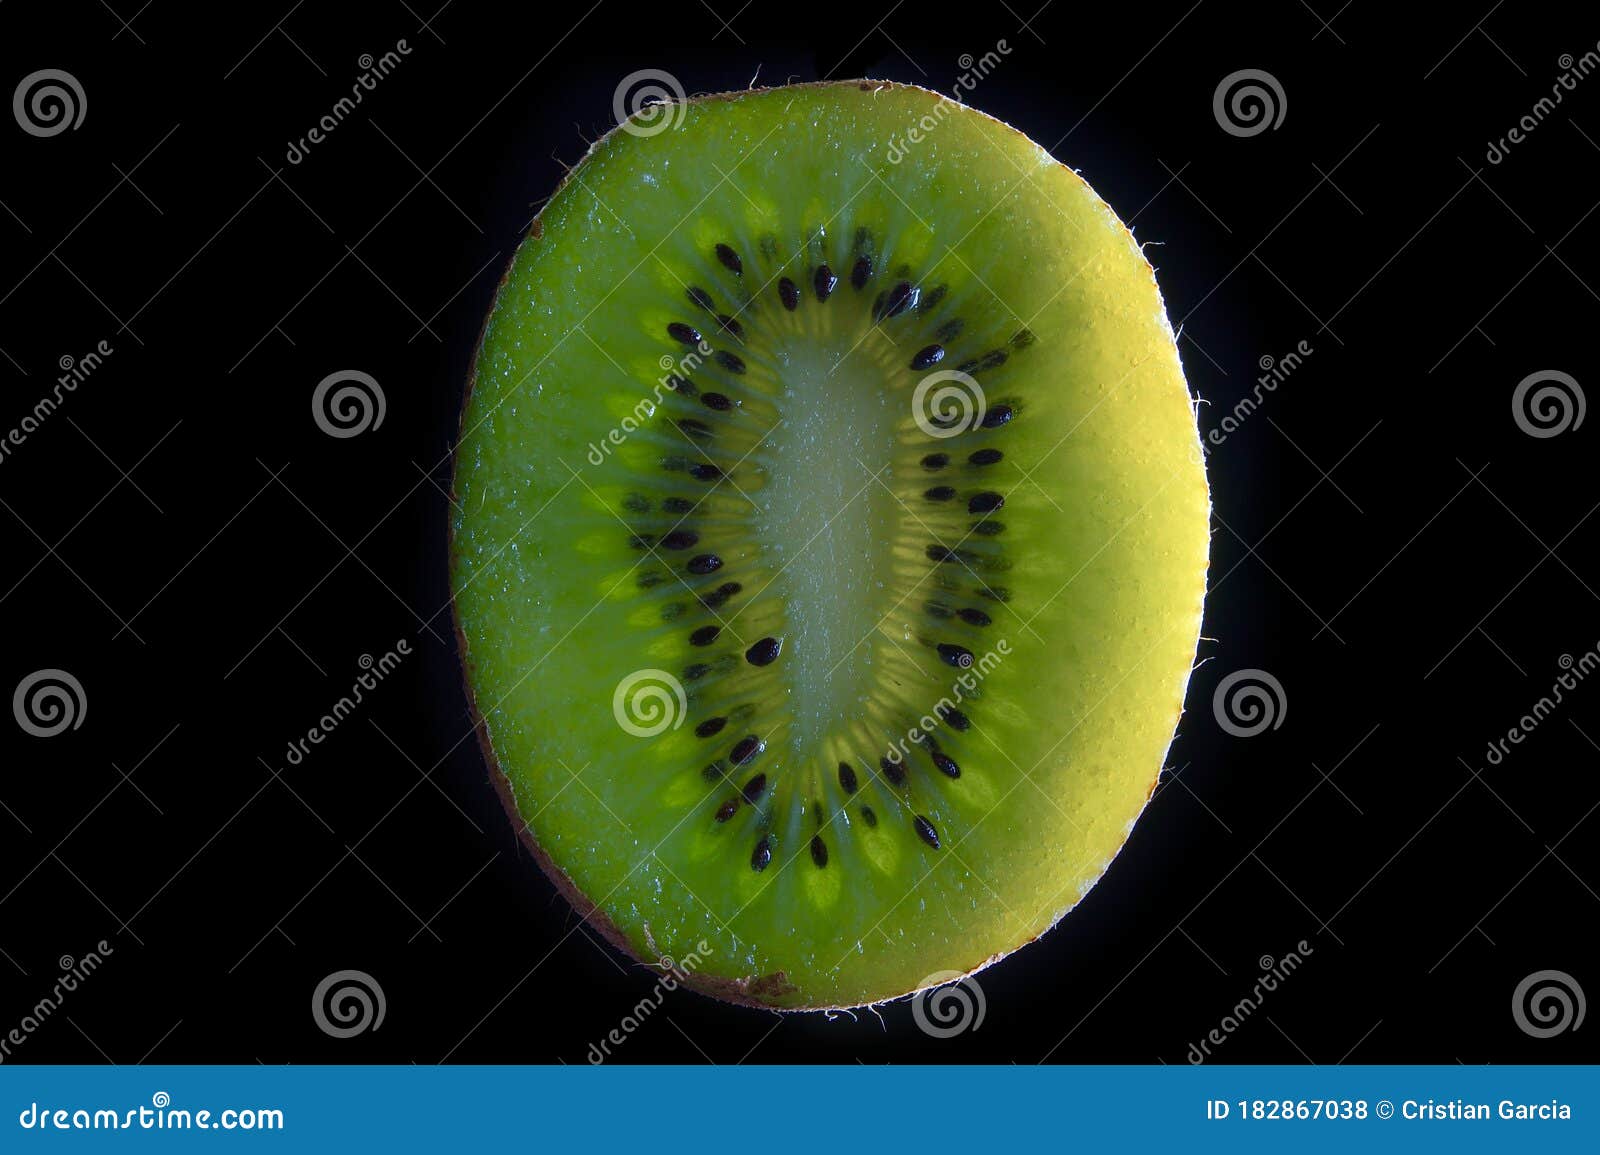 perfect kiwi